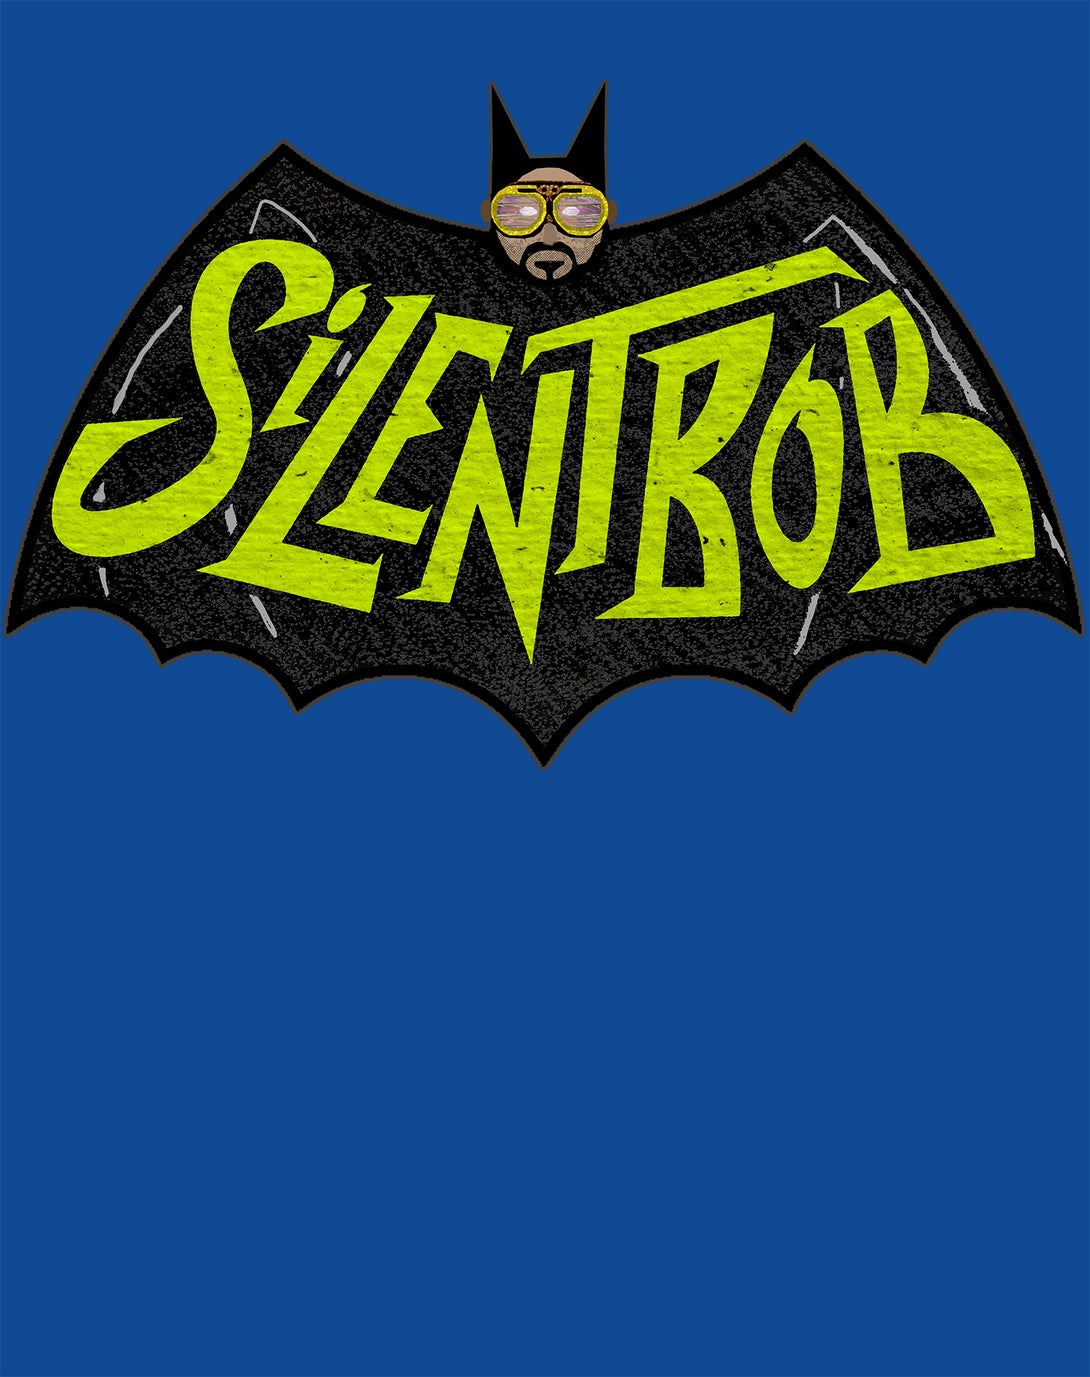 Kevin Smith View Askewniverse Logo Silent Bat Bob Official Women's T-Shirt Blue - Urban Species Design Close Up